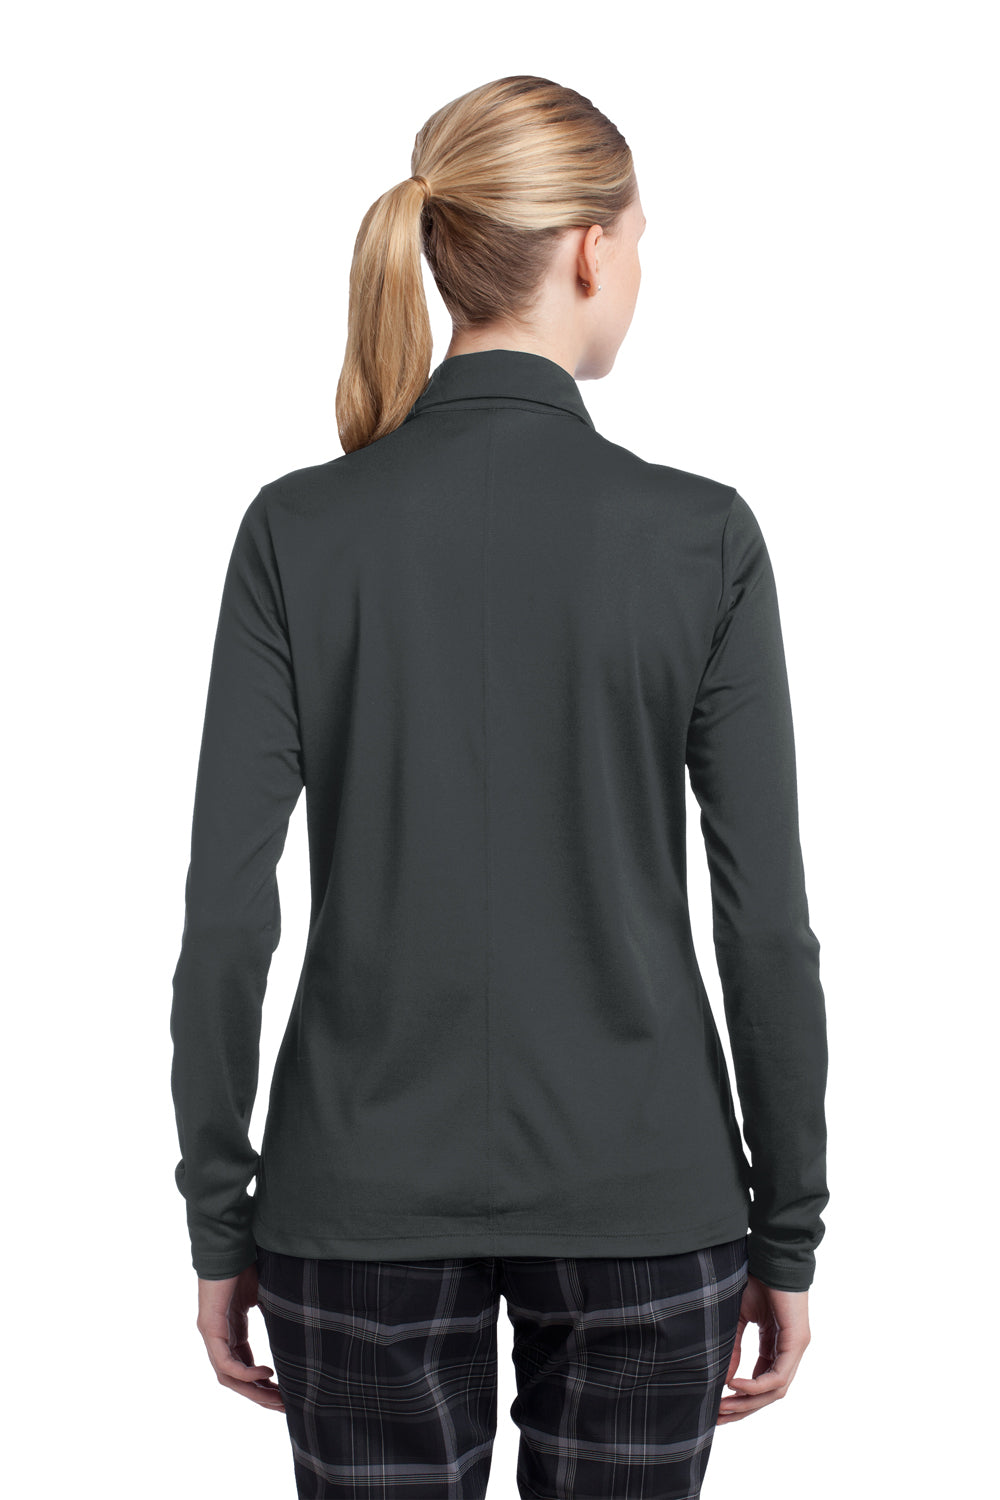 Nike 545322 Womens Stretch Tech Dri-Fit Moisture Wicking Long Sleeve Polo Shirt Anthracite Grey Model Back